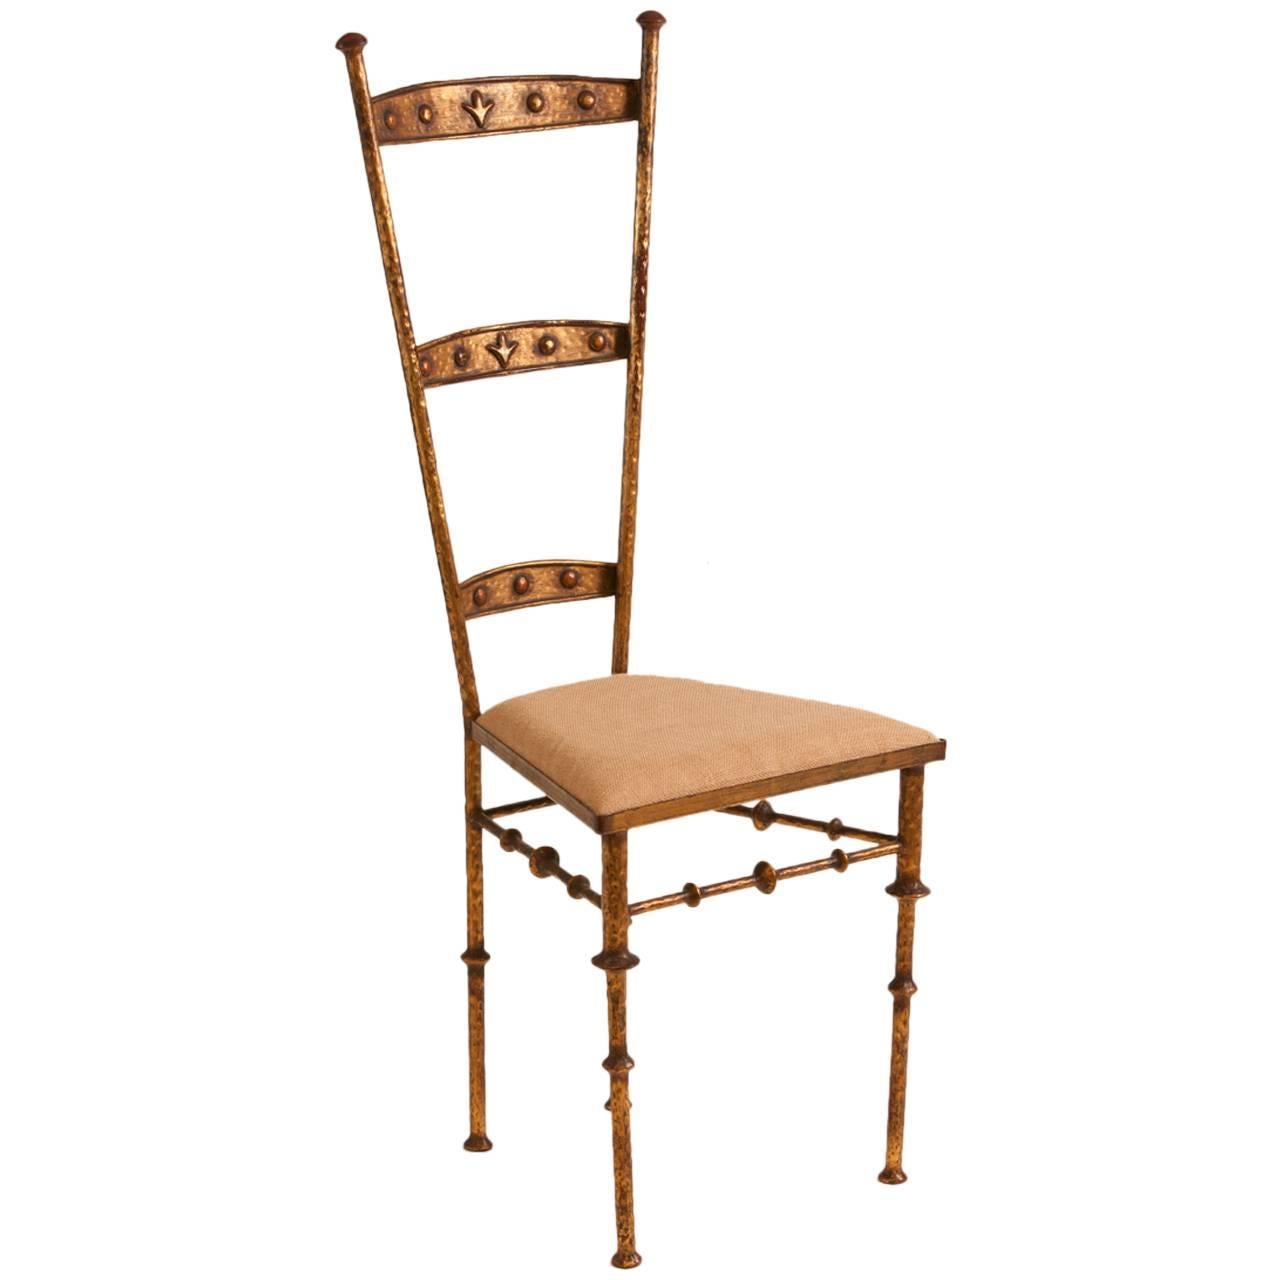 Early 20th Century Italian Vanity Chair